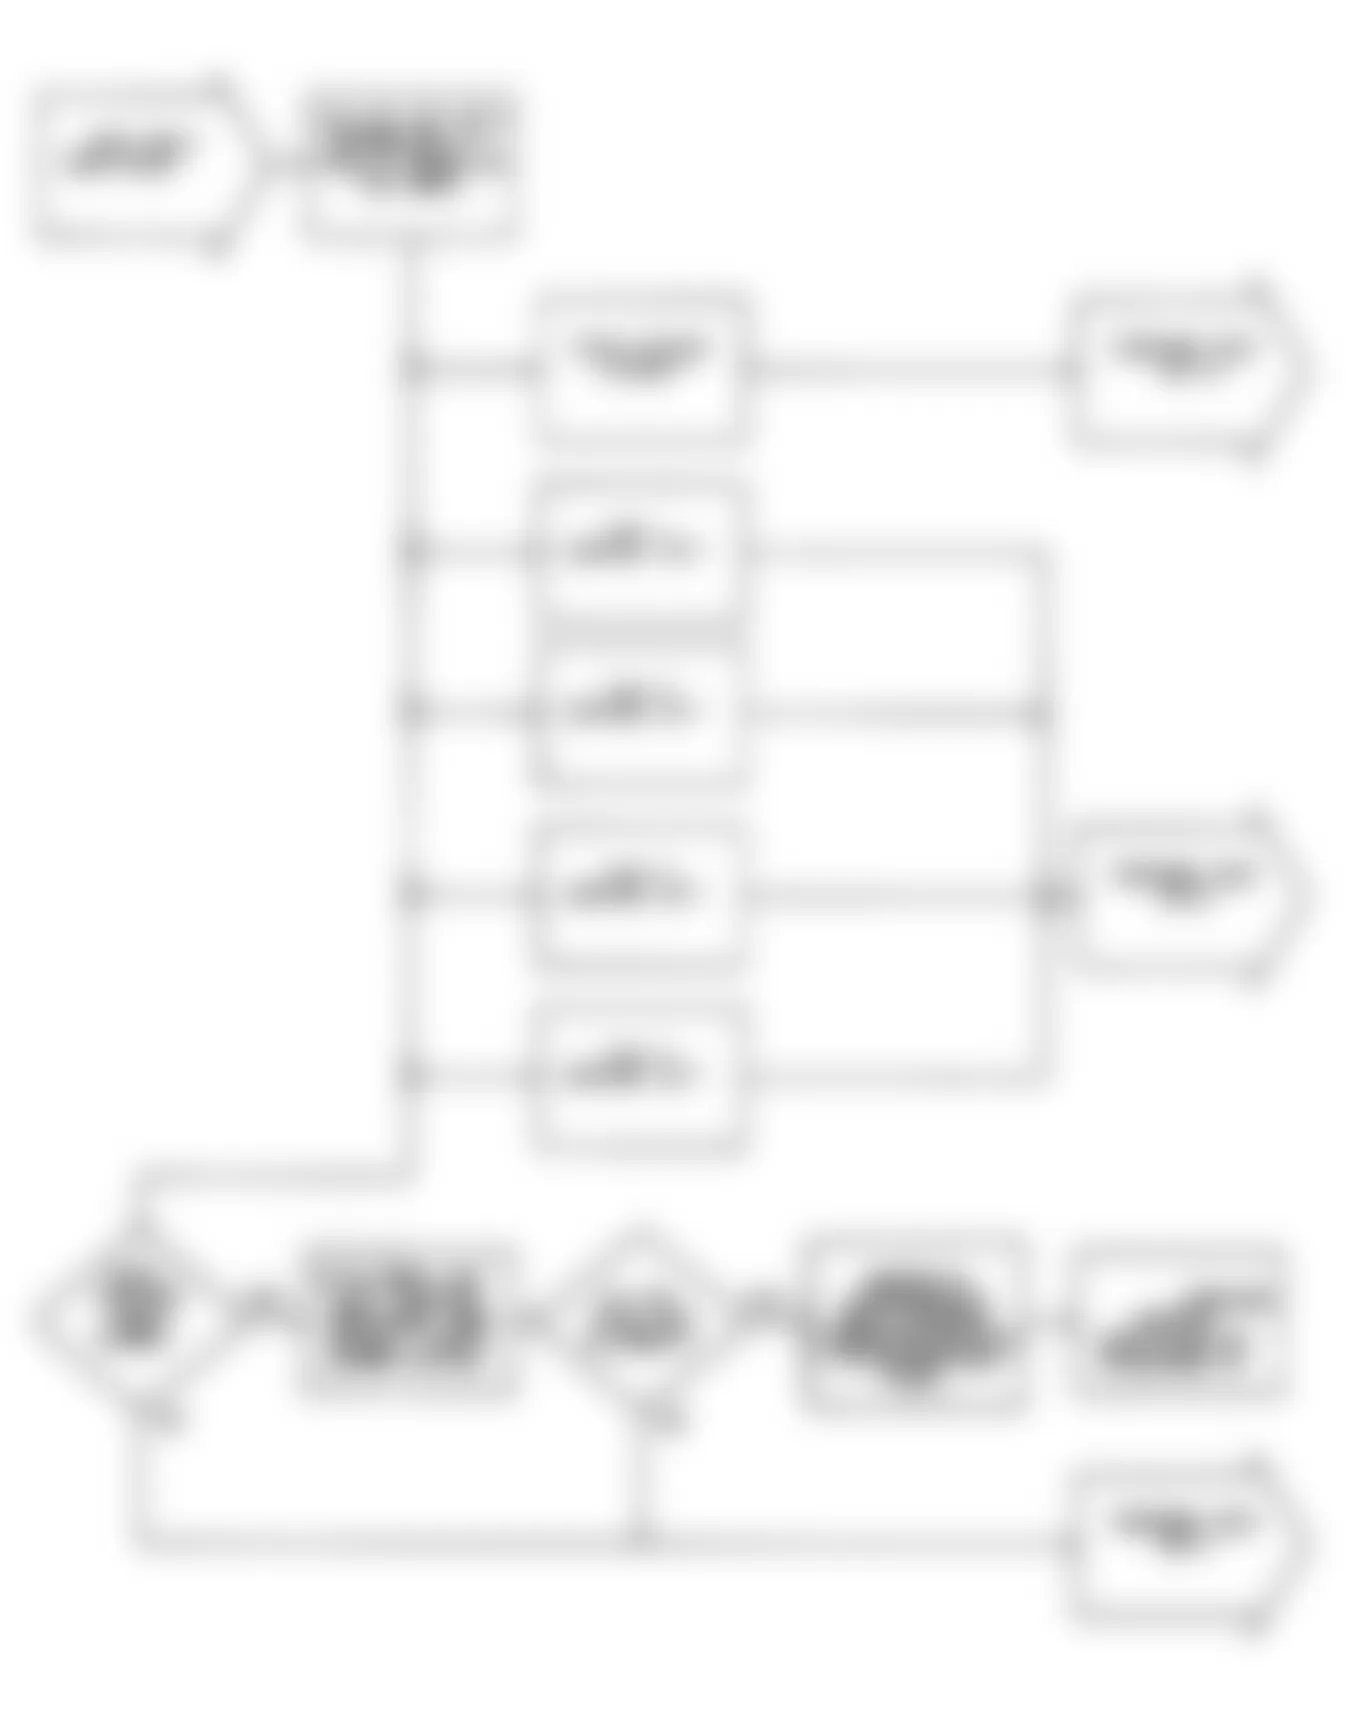 Dodge Caravan LE 1990 - Component Locations -  NS2 (TURBO): Flow Chart (2 of 2)